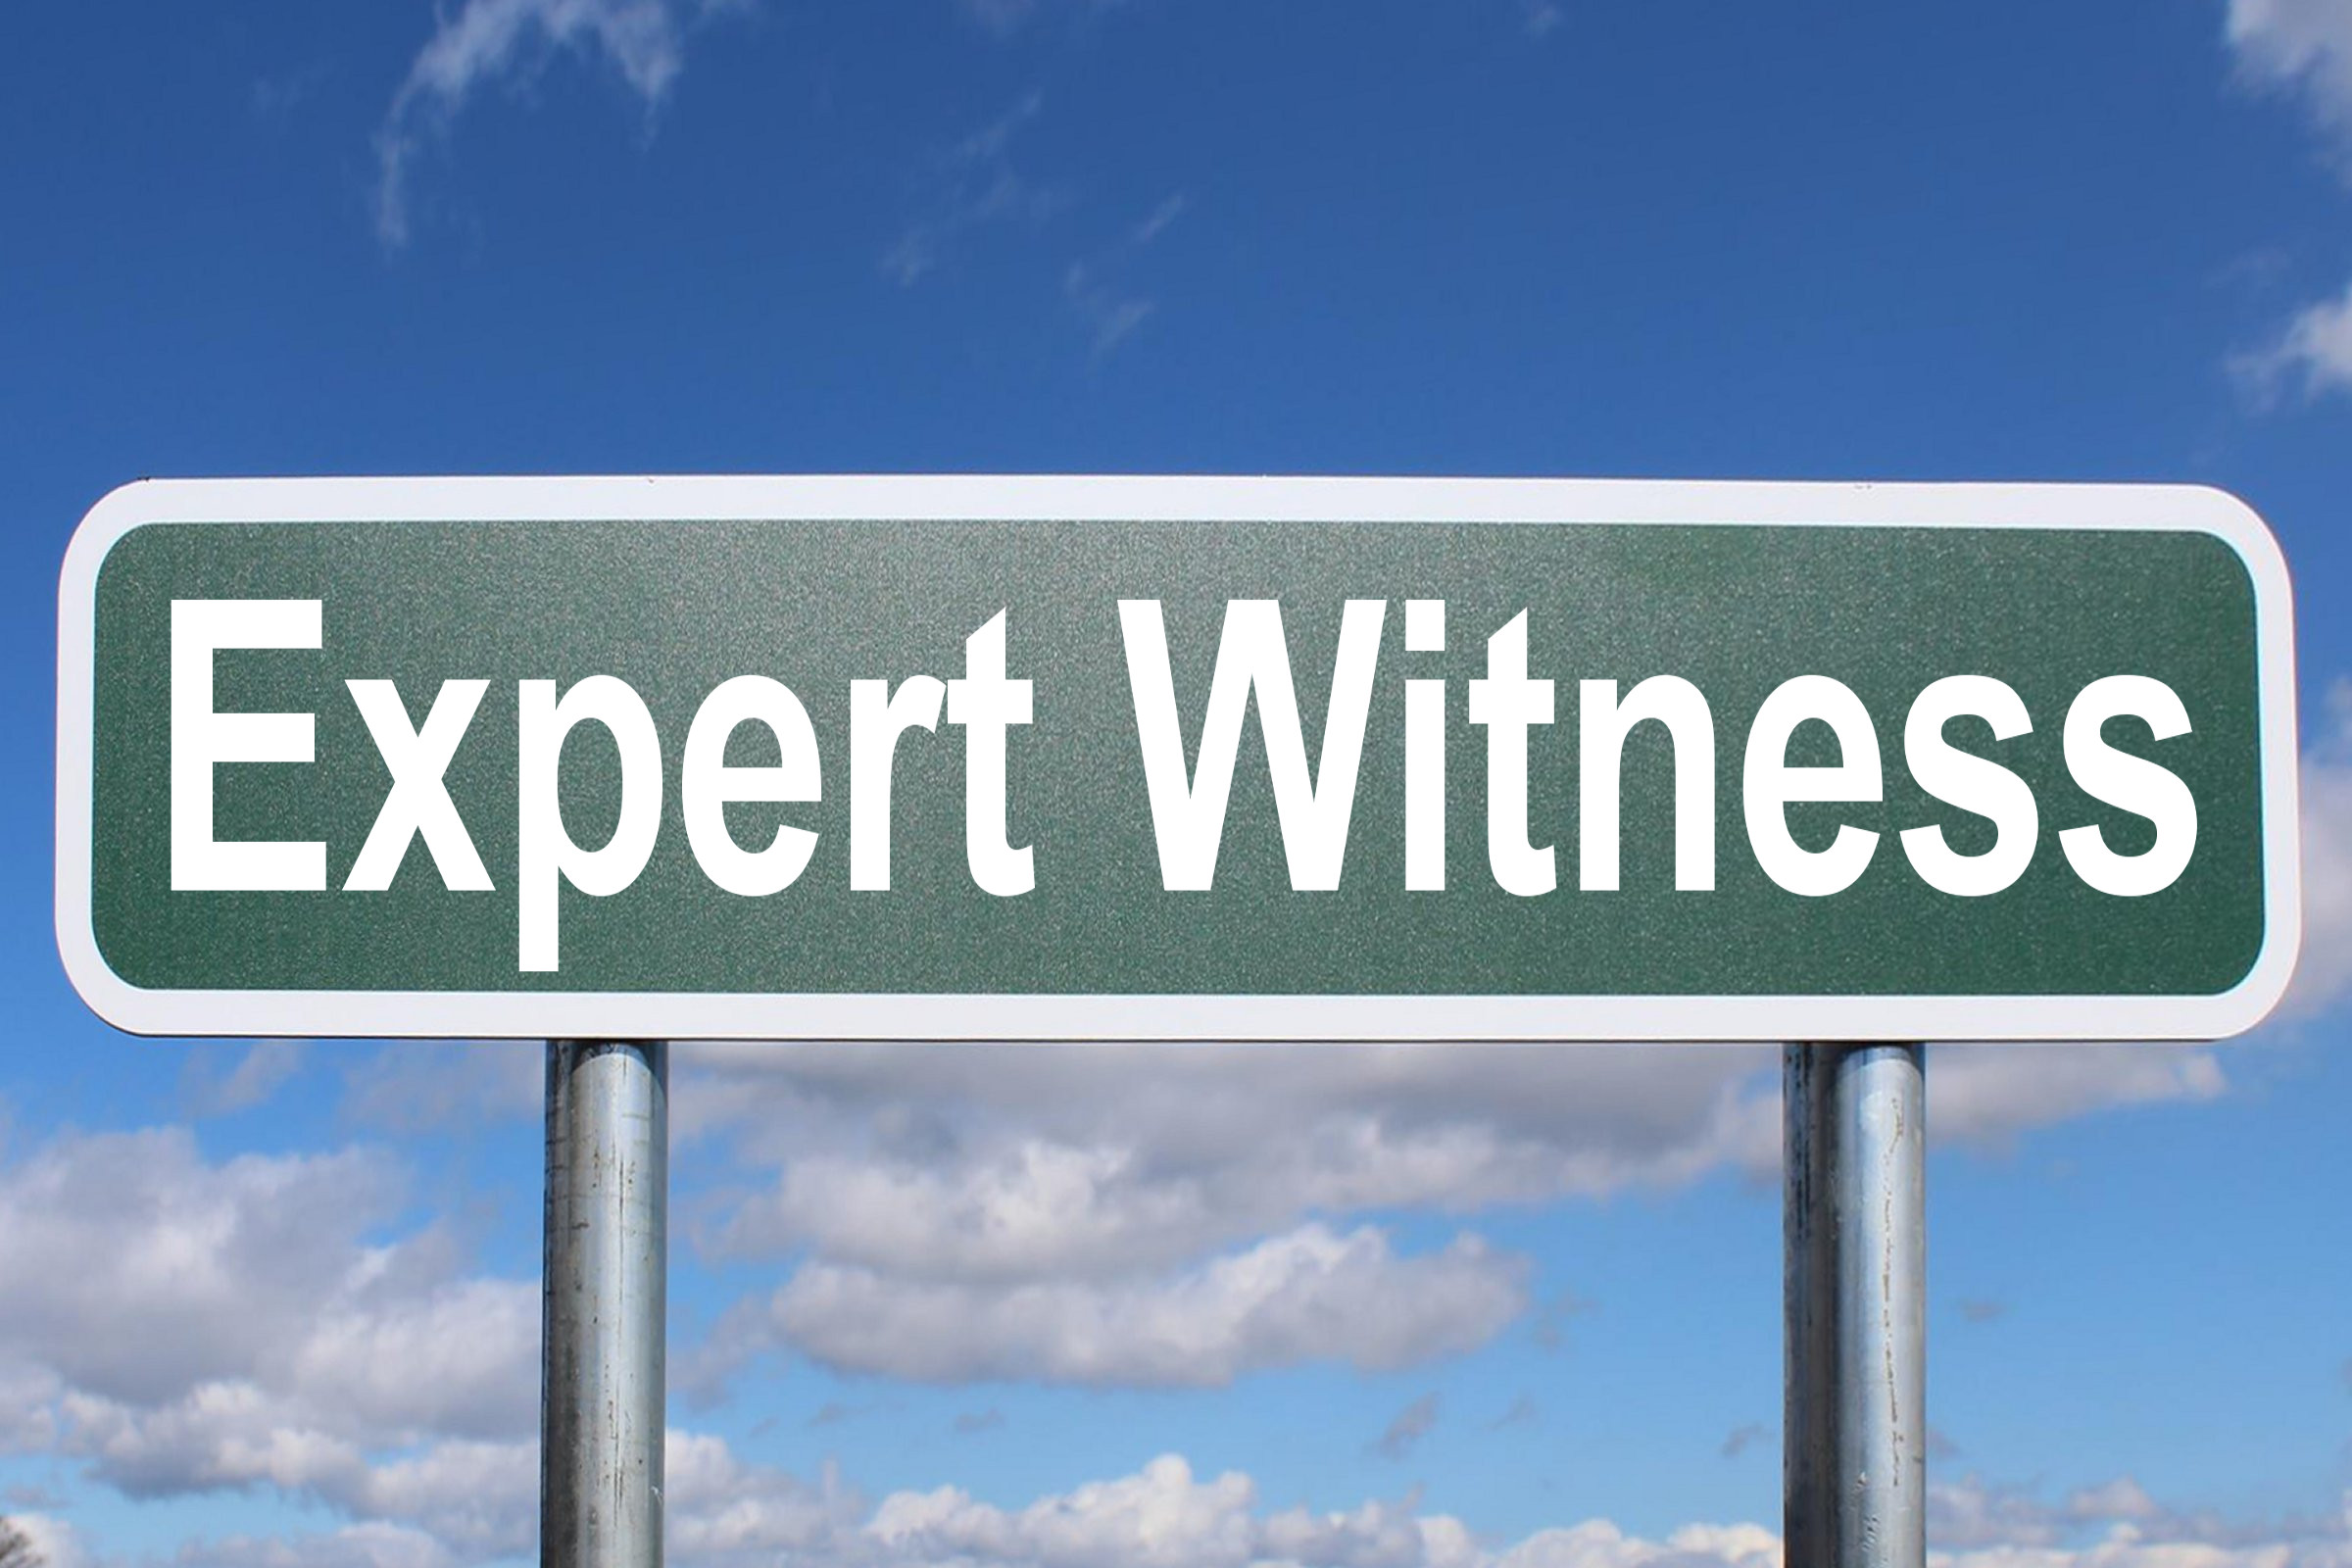 expert witness